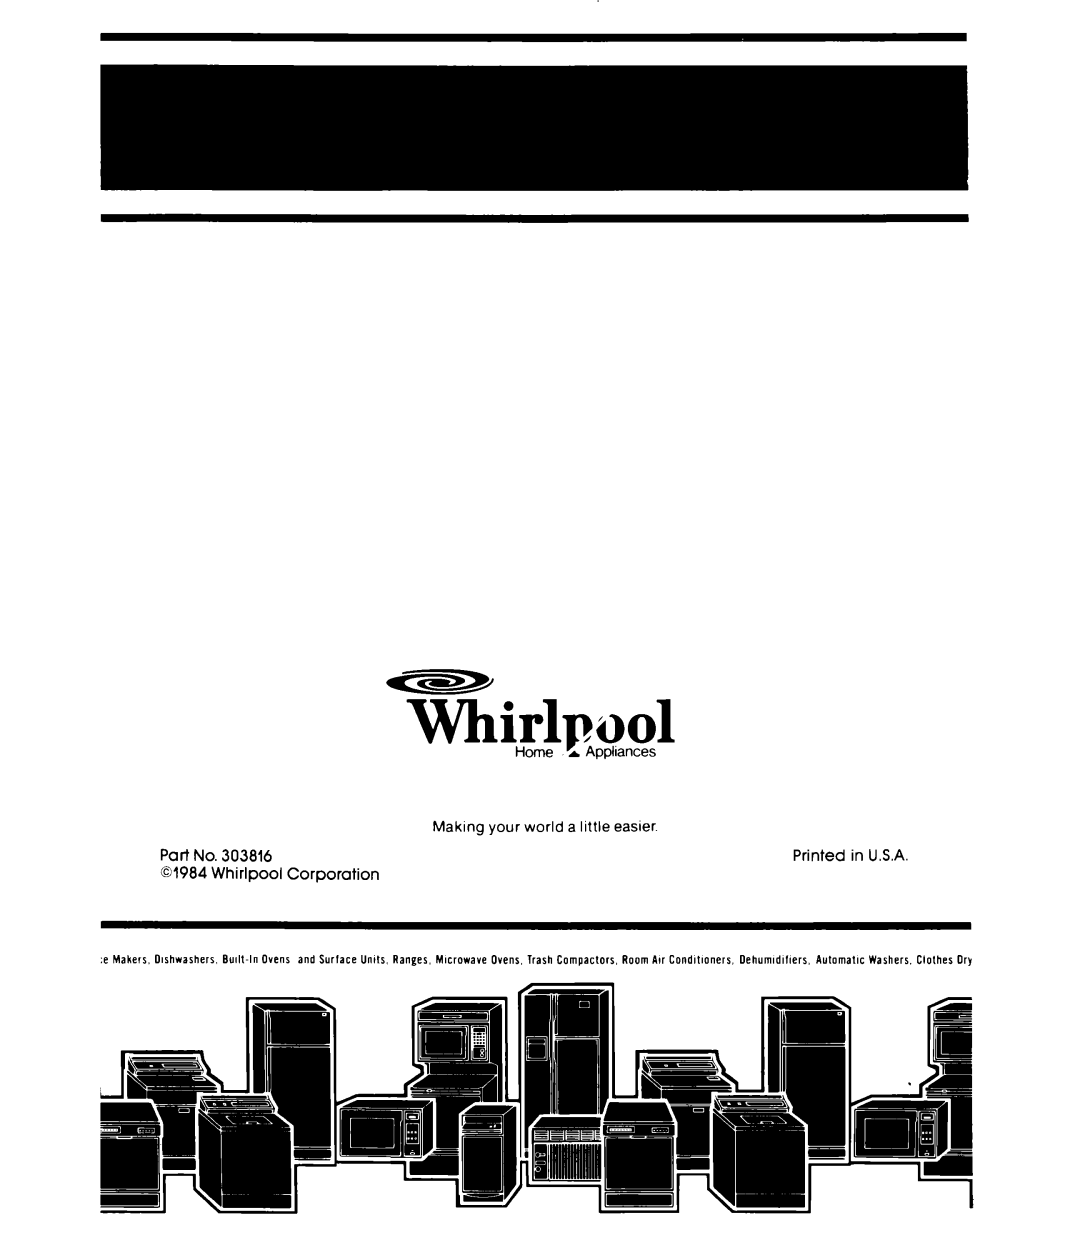 Whirlpool DU8903XL manual Whirlnool, Home % Appliances, Making your world a little easier, Whirlpool 